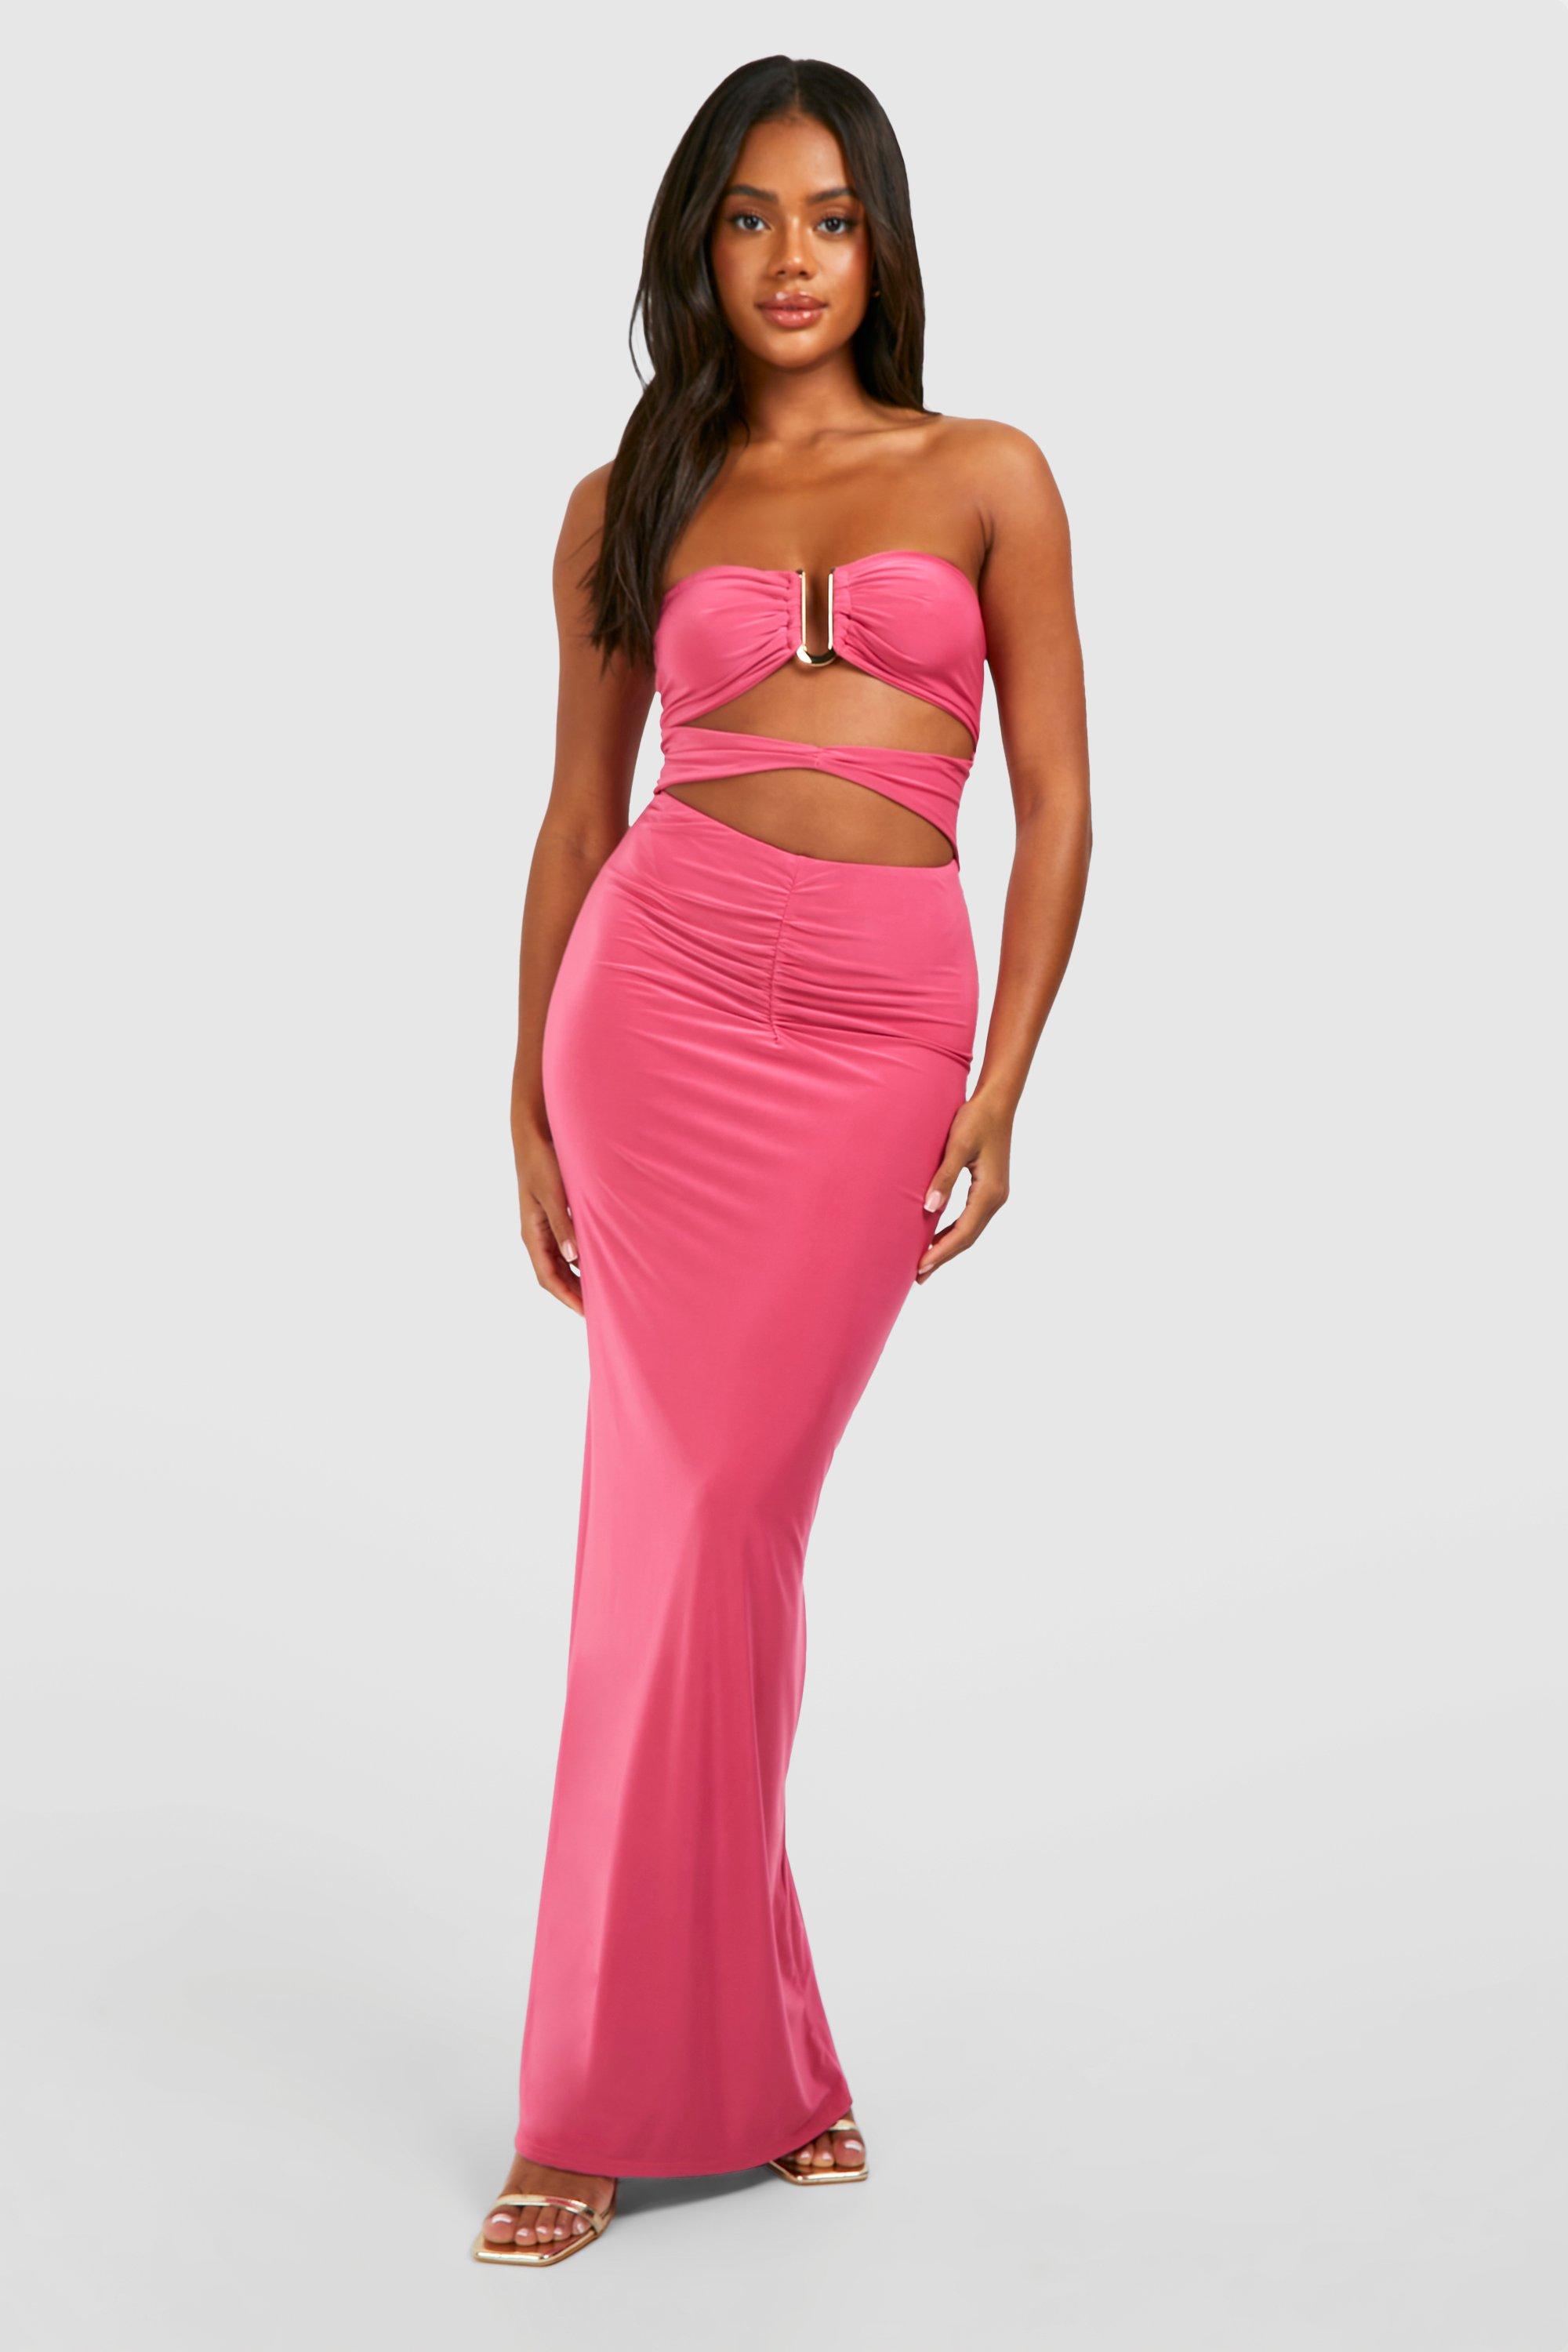 Image of Bandeau Gold Trim Cut Out Maxi Dress, Pink